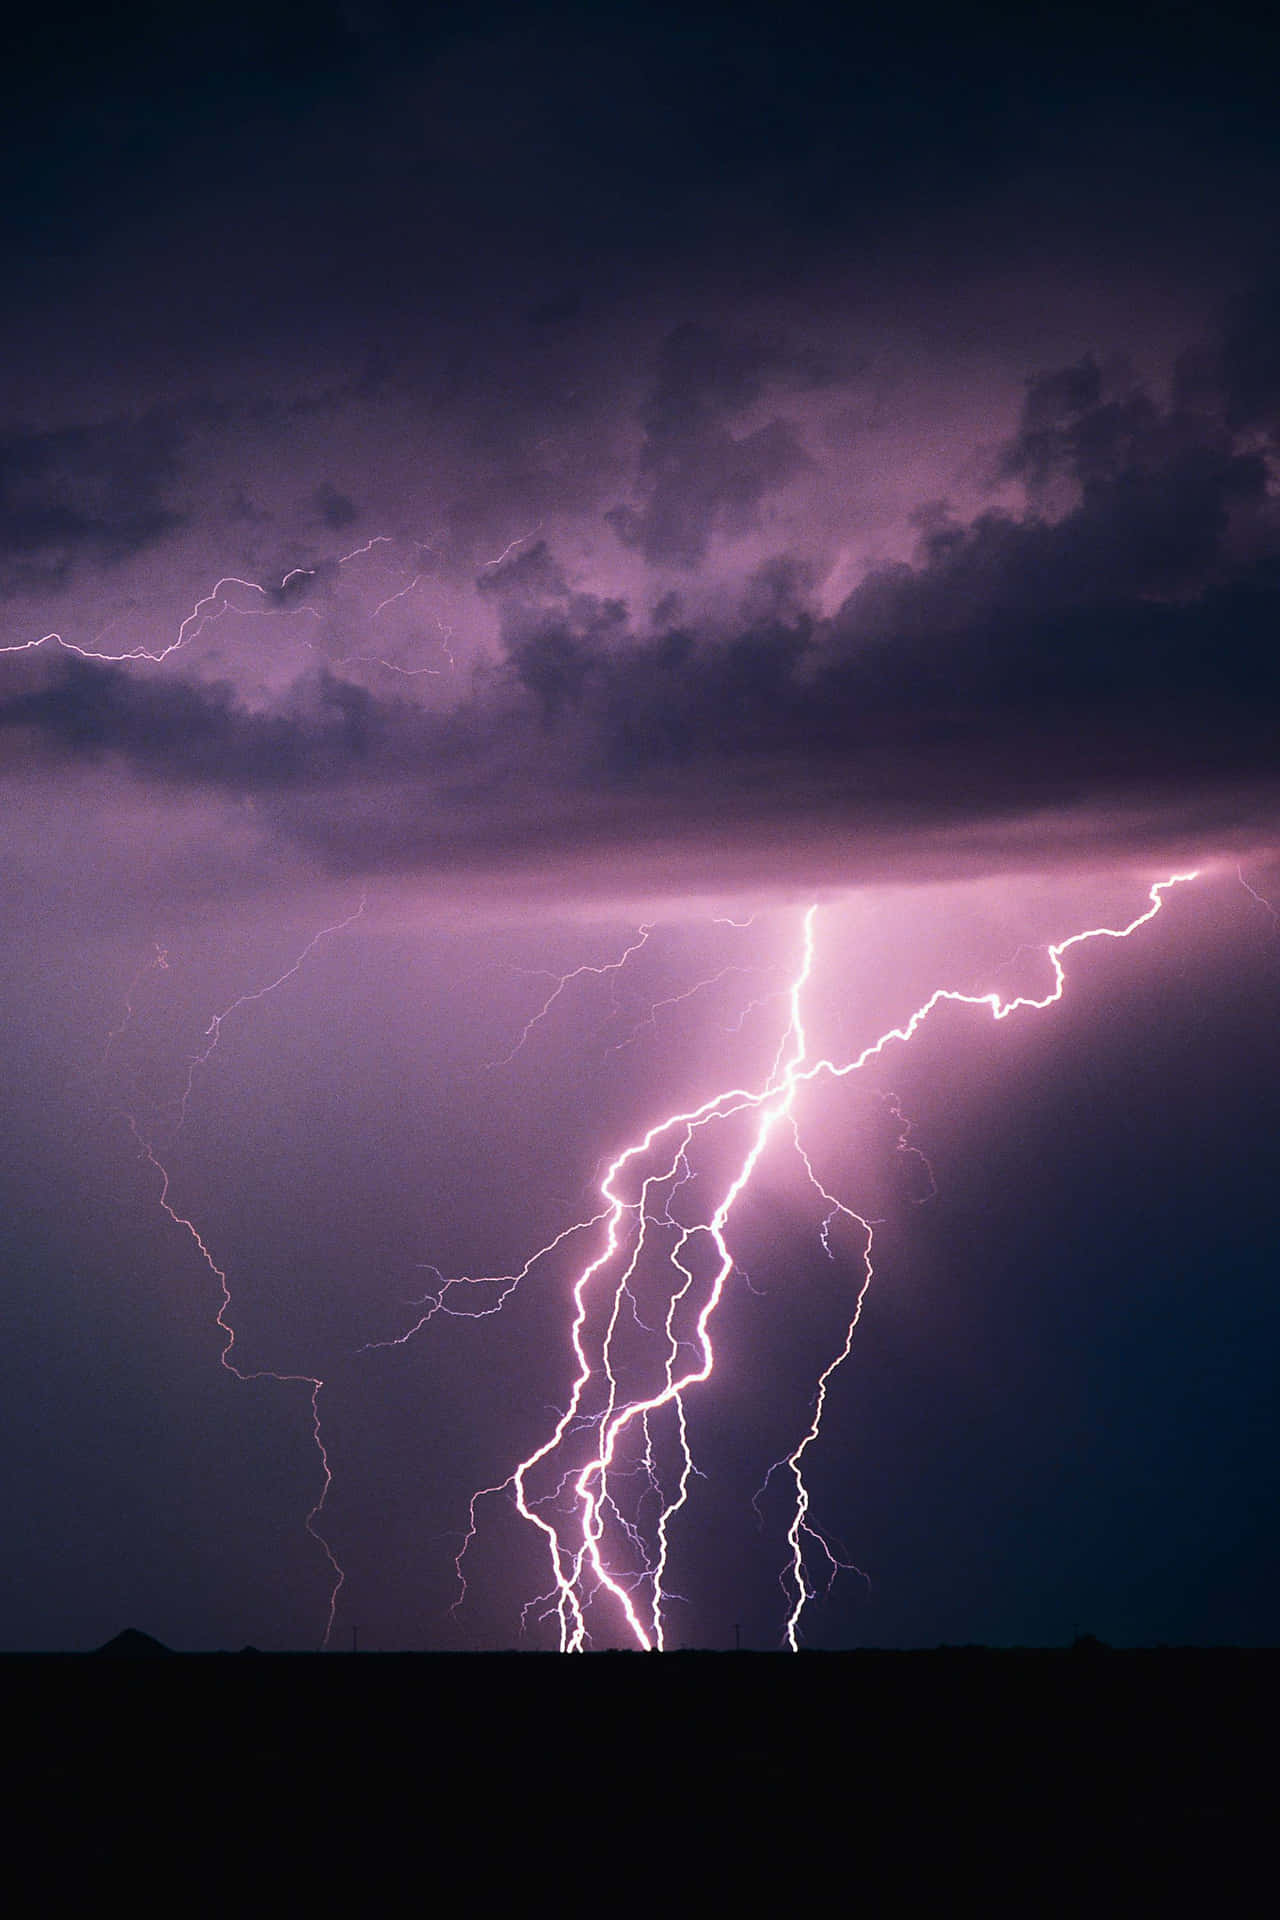 A powerful lightning bolt illuminates the sky